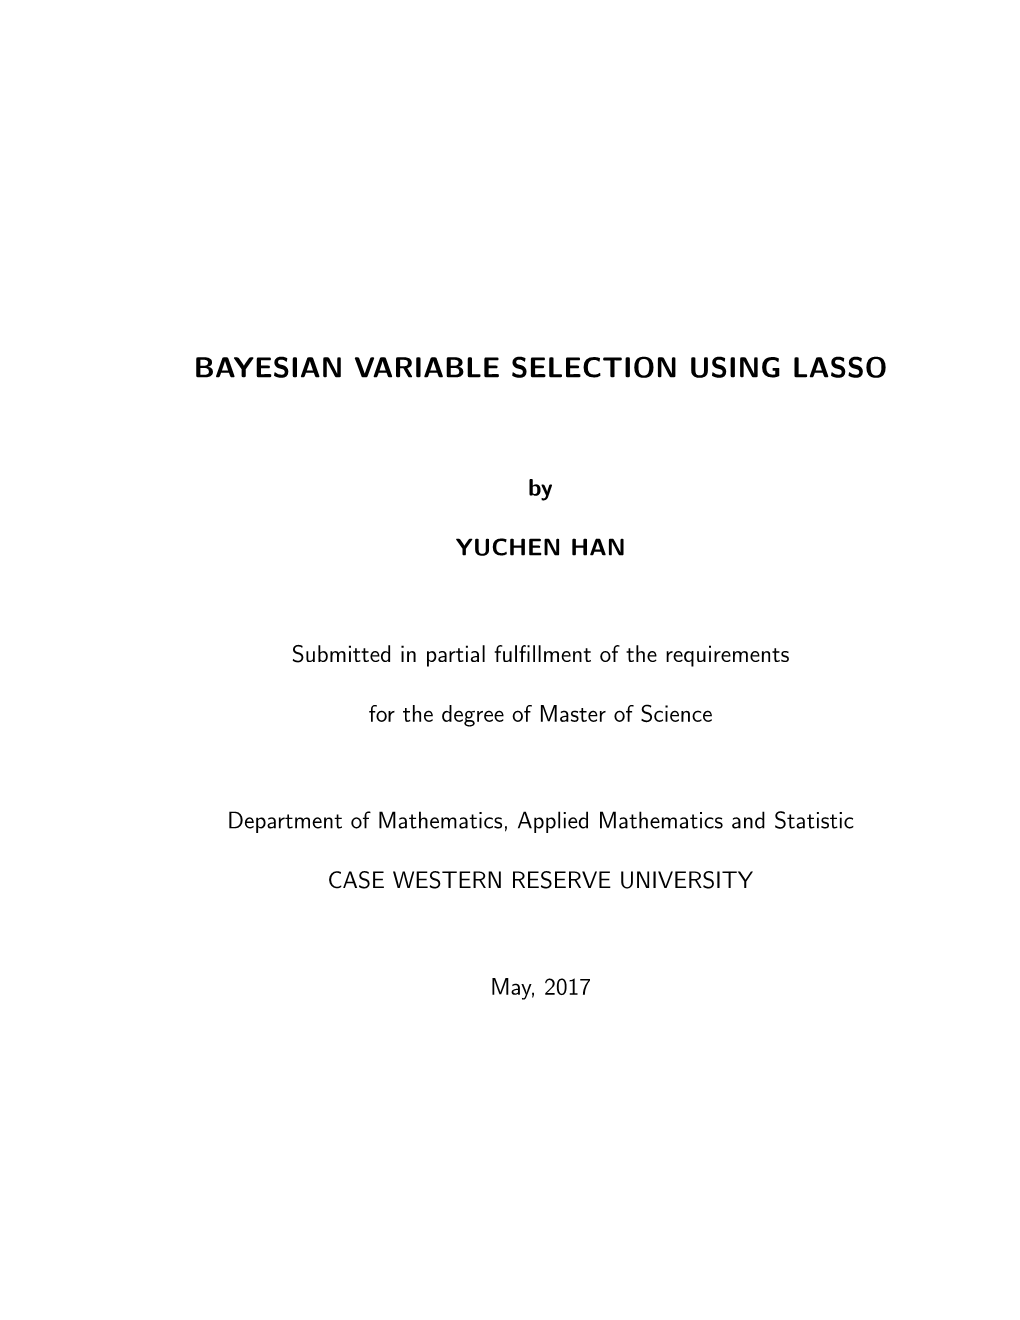 Bayesian Variable Selection Using Lasso